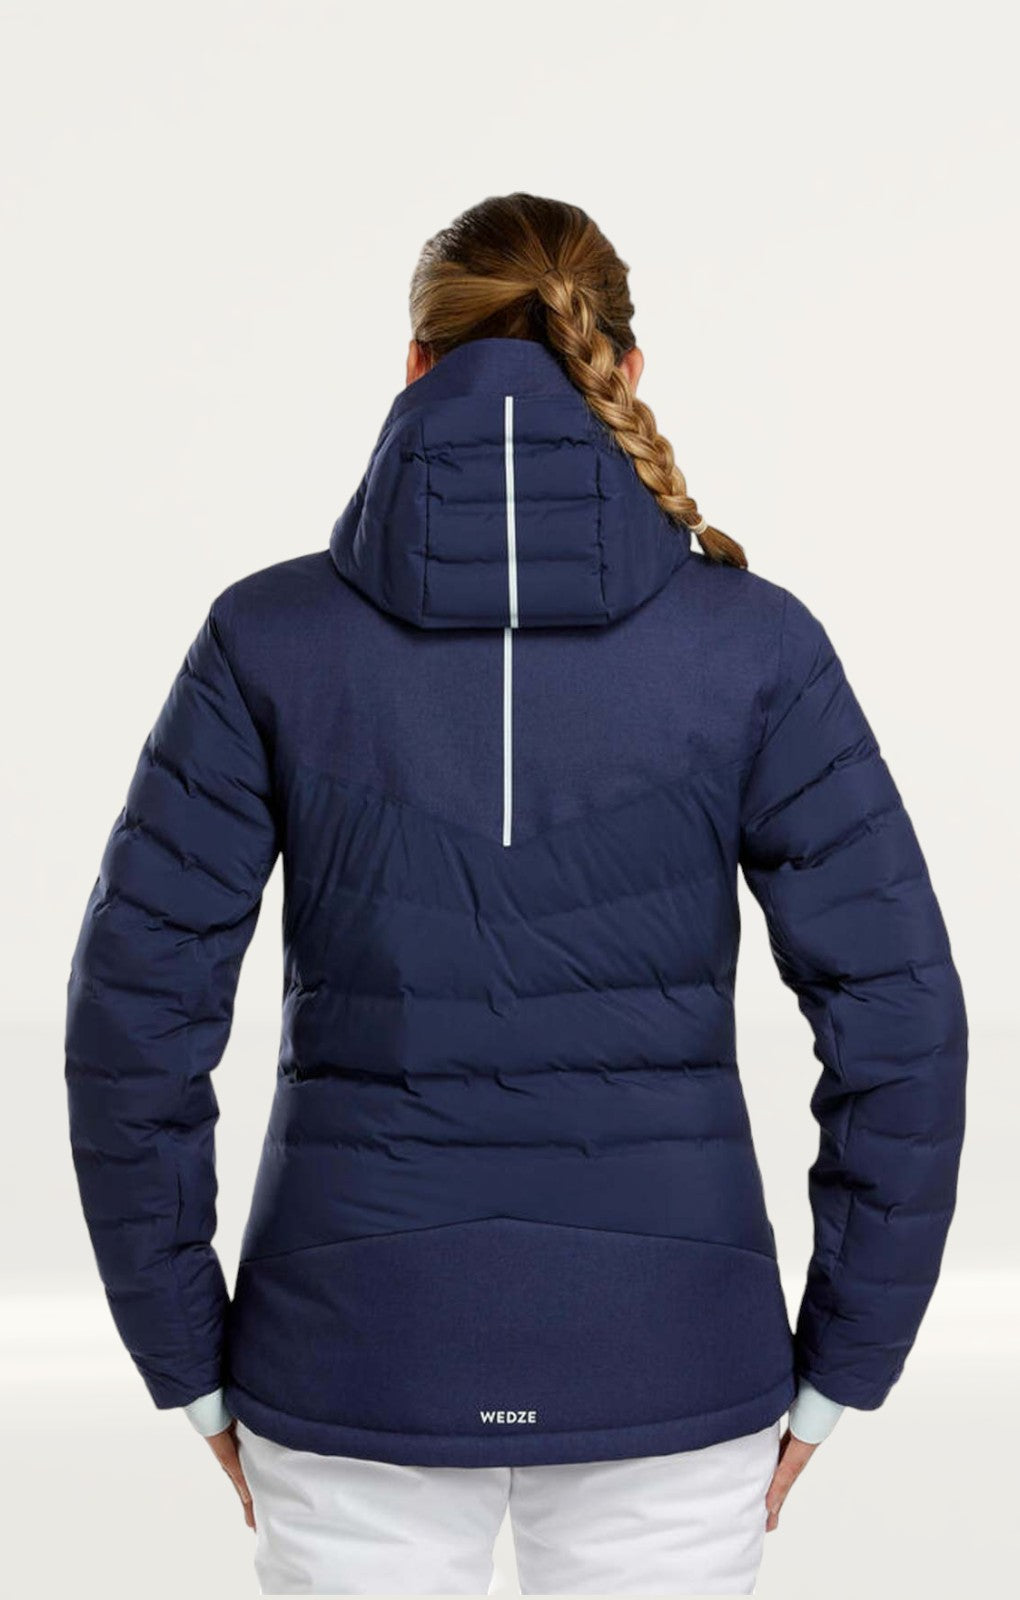 Decathlon Navy Women's Piste Ski Jacket product image